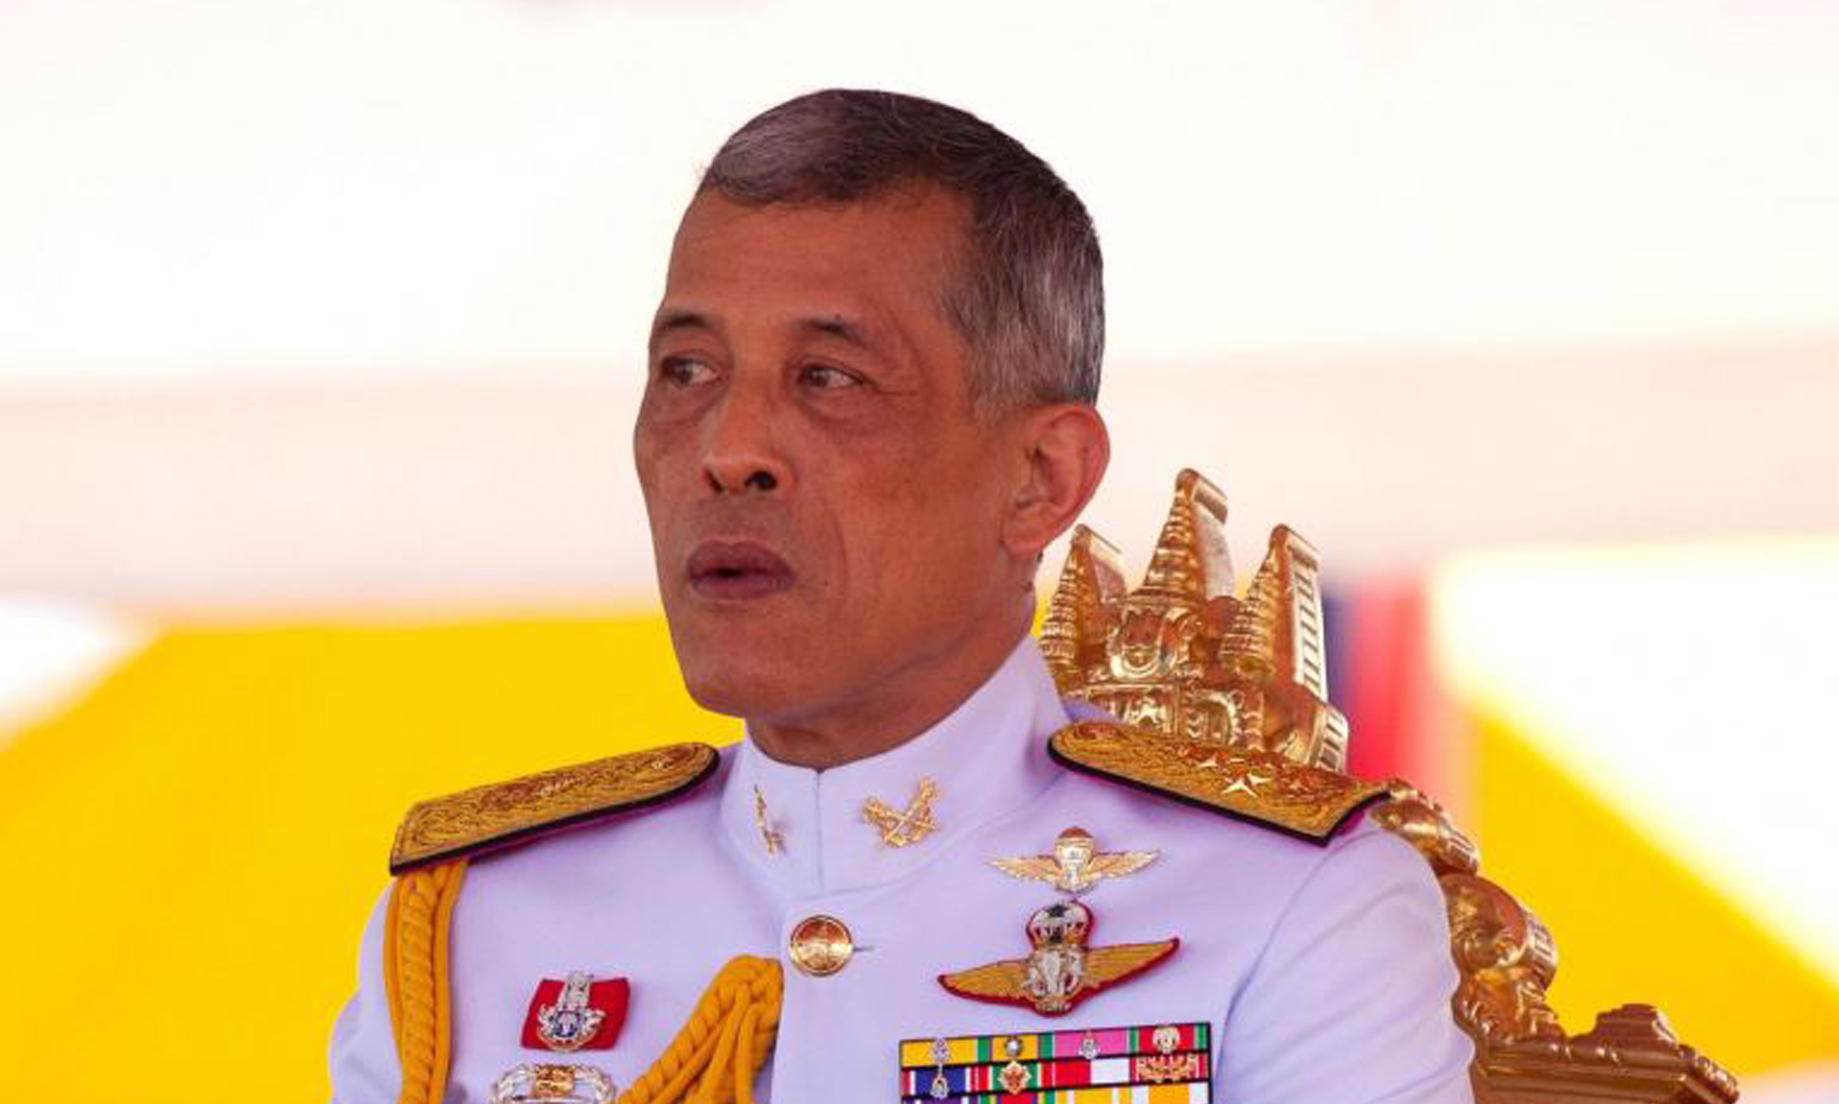 Thai King Says Involving Princess In Politics “Inappropriate”